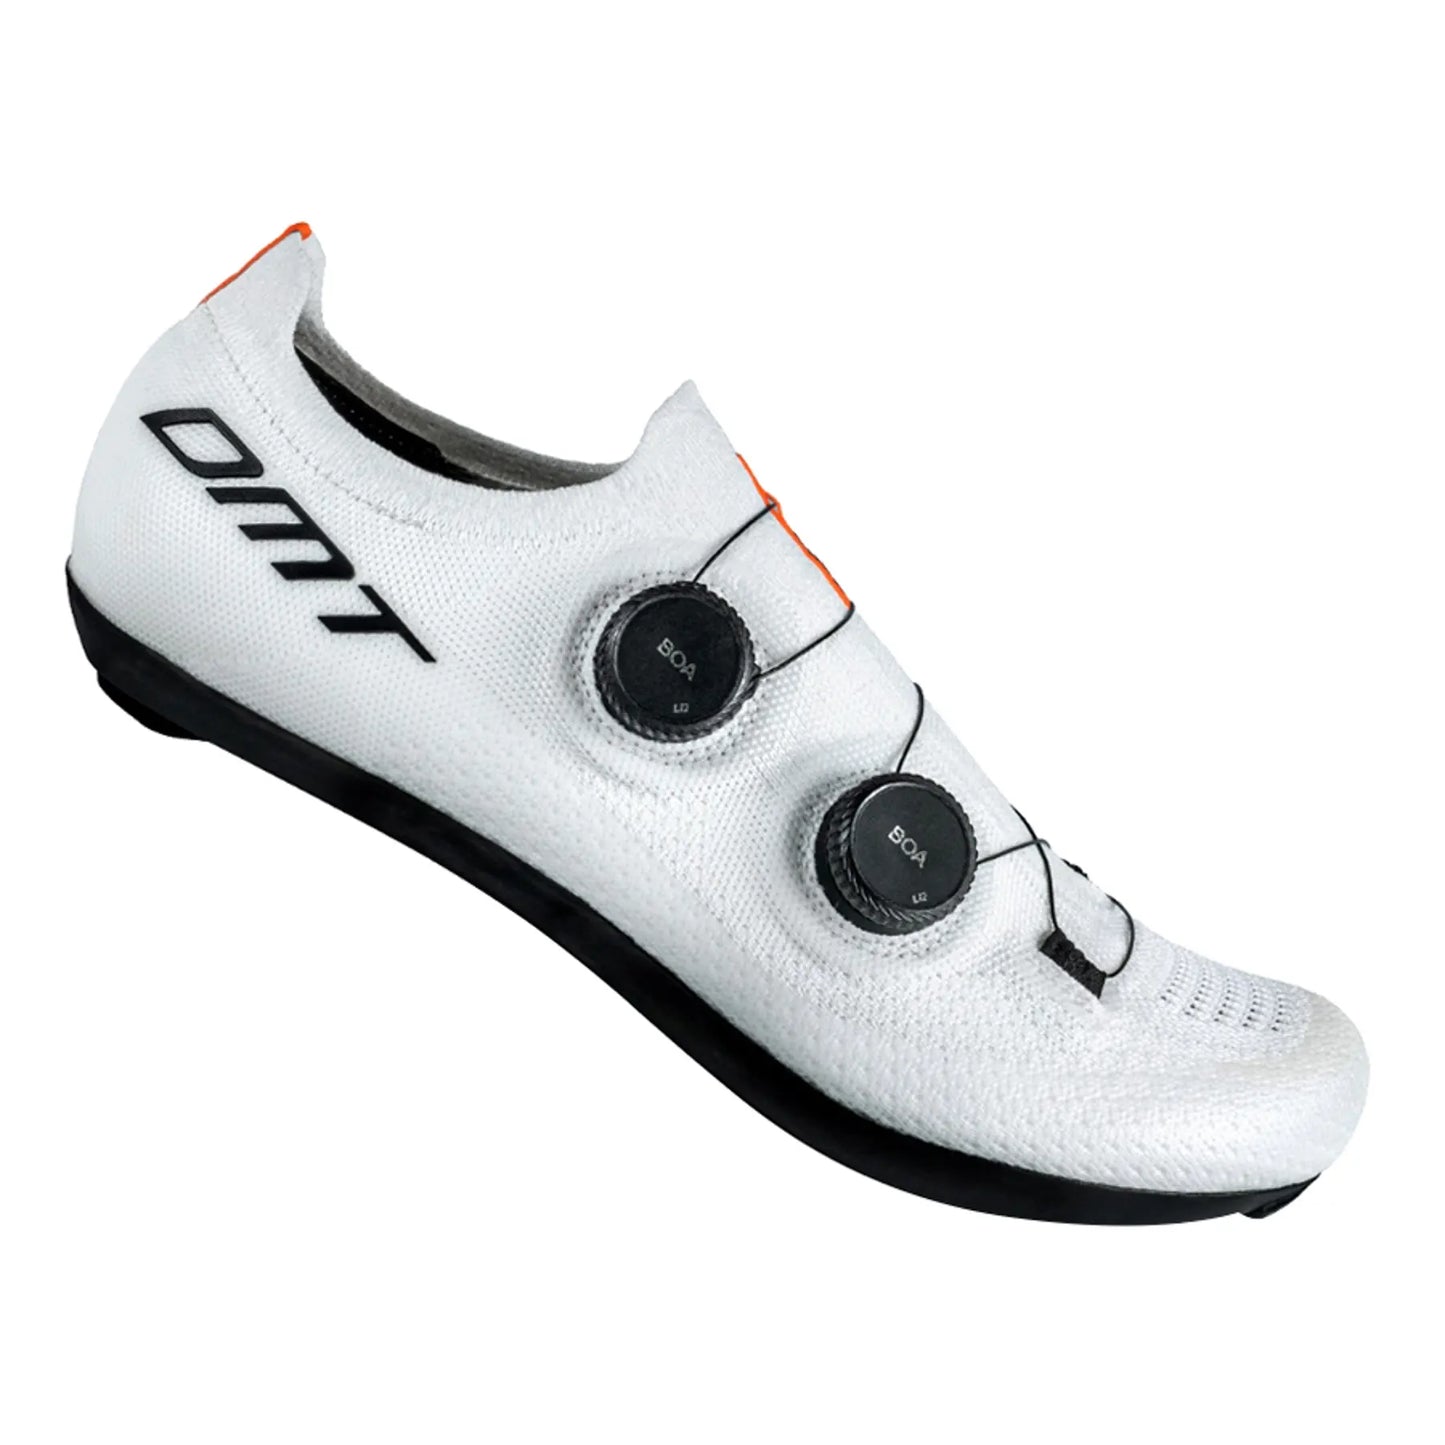 Zapatos Dmt Kr0 White/White | VAS Cycling Boutique